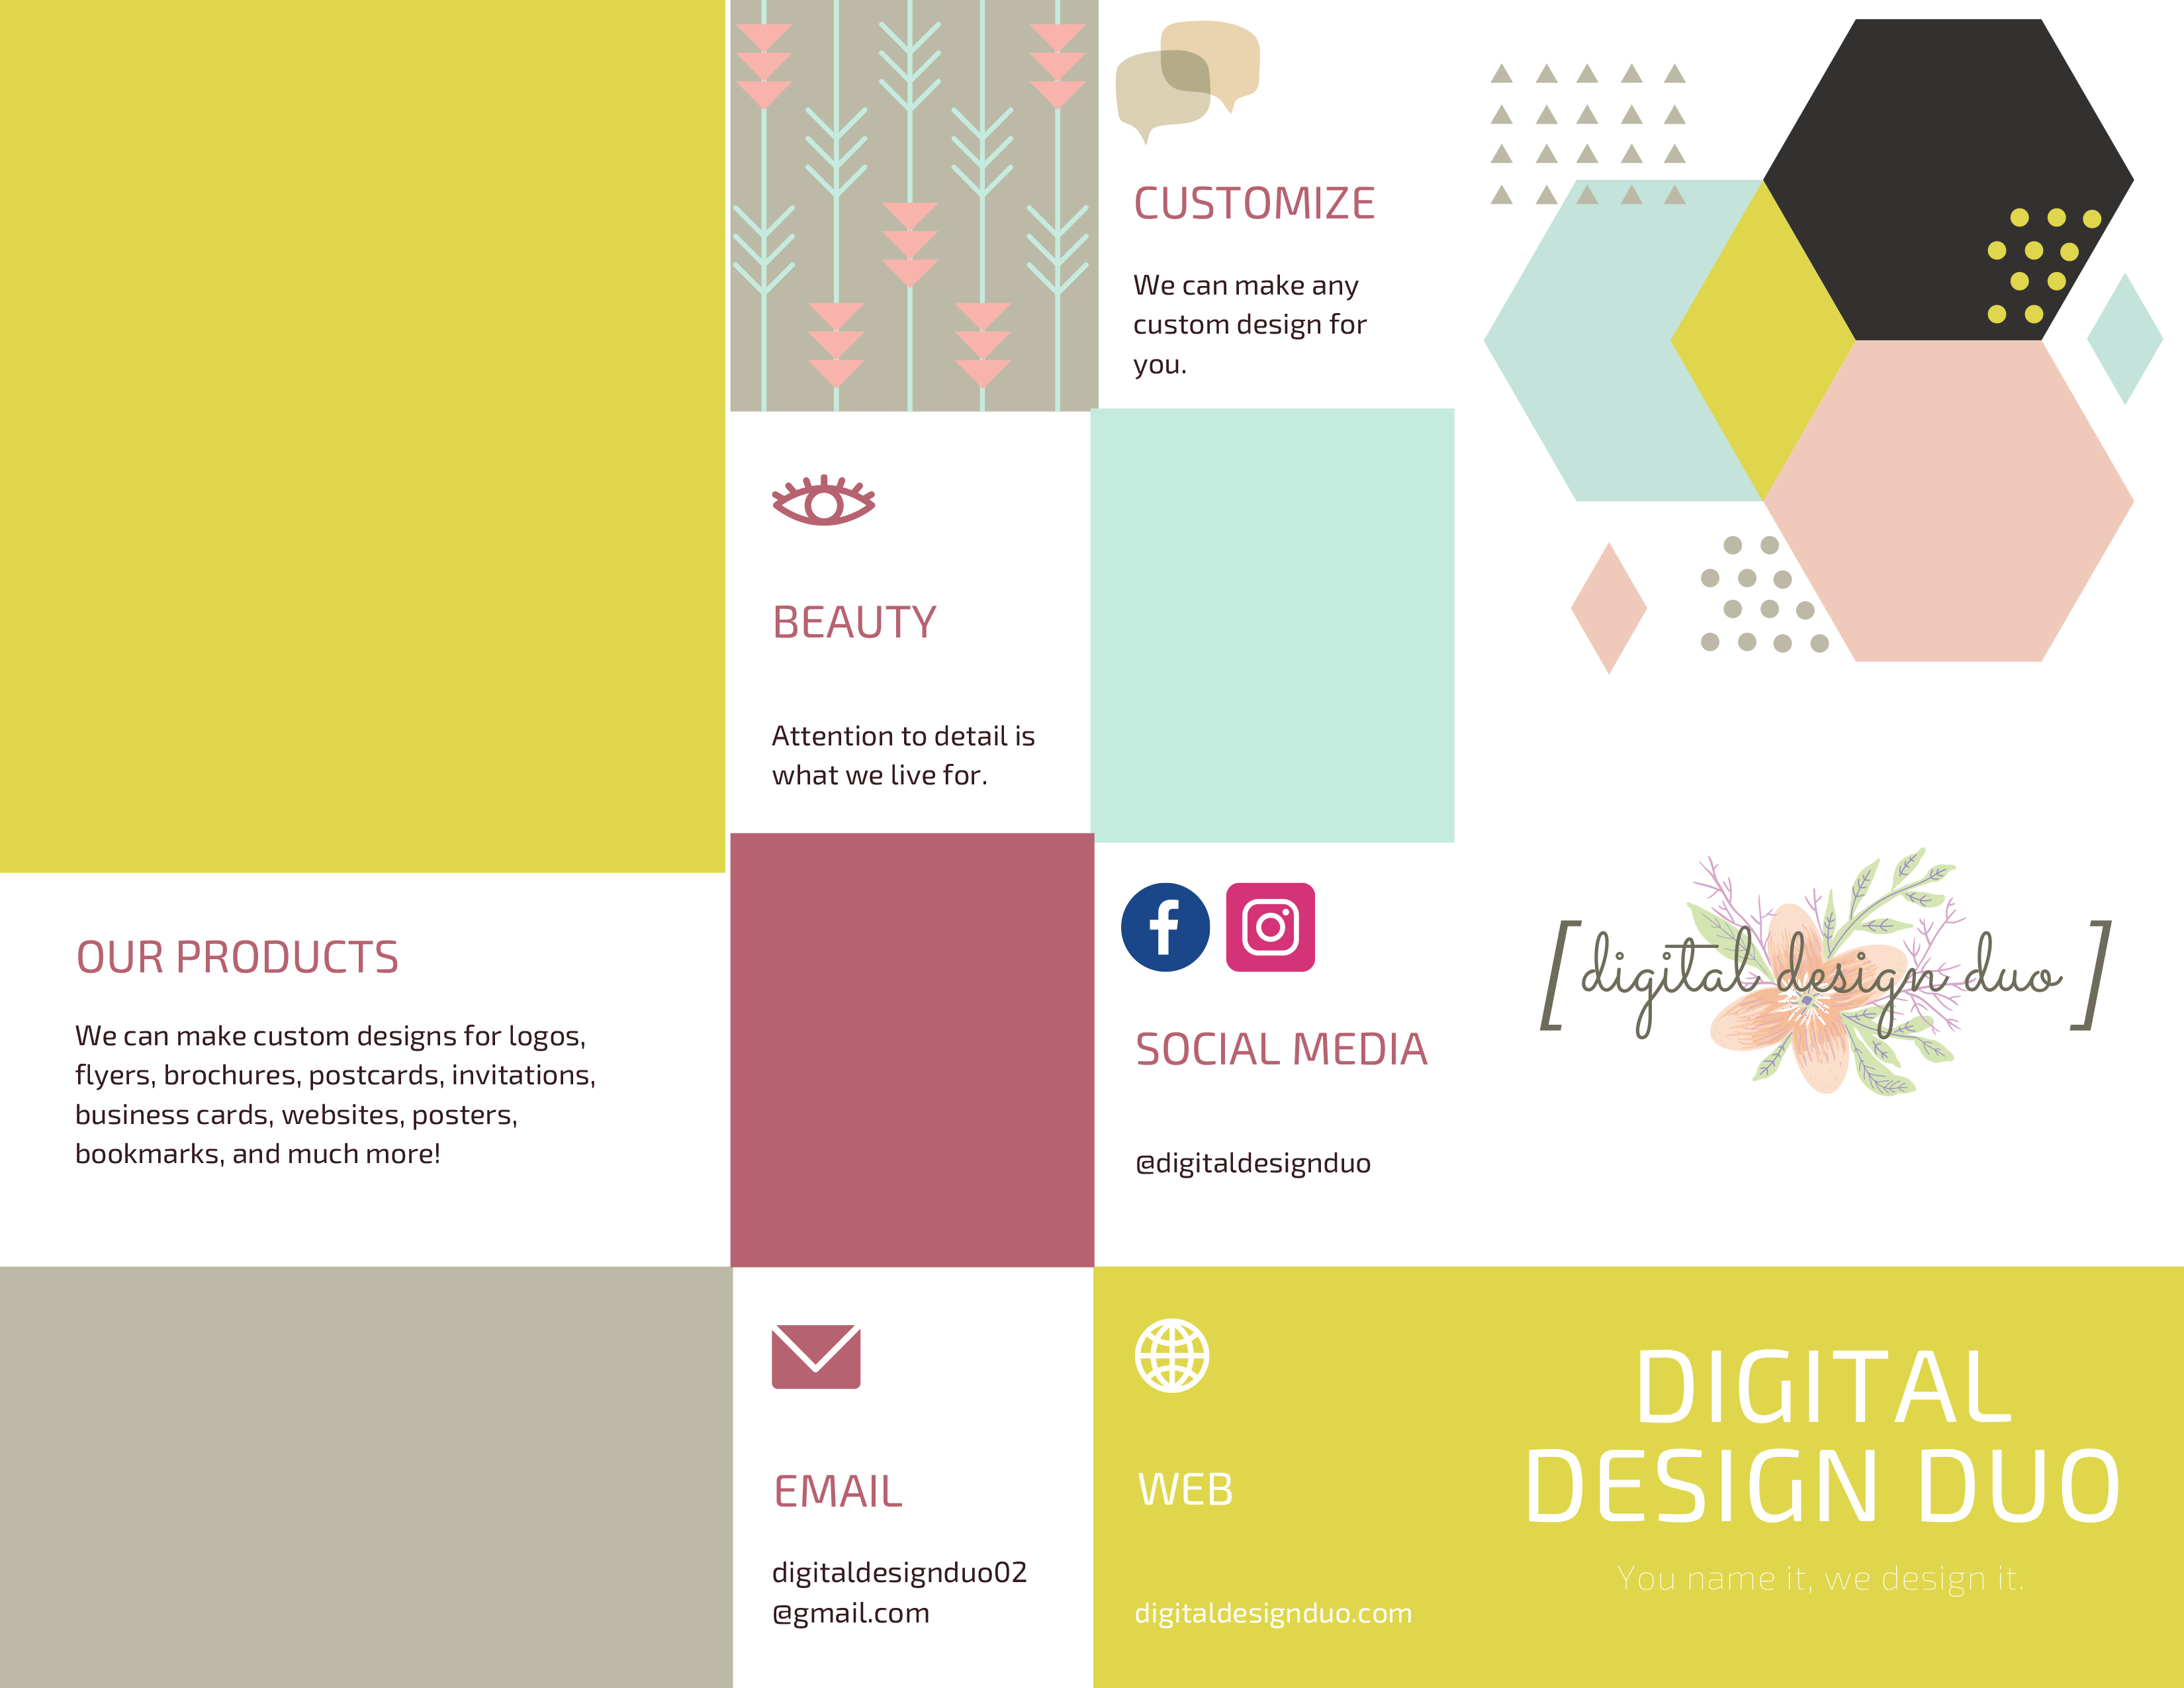 Digital design duo example design brochure